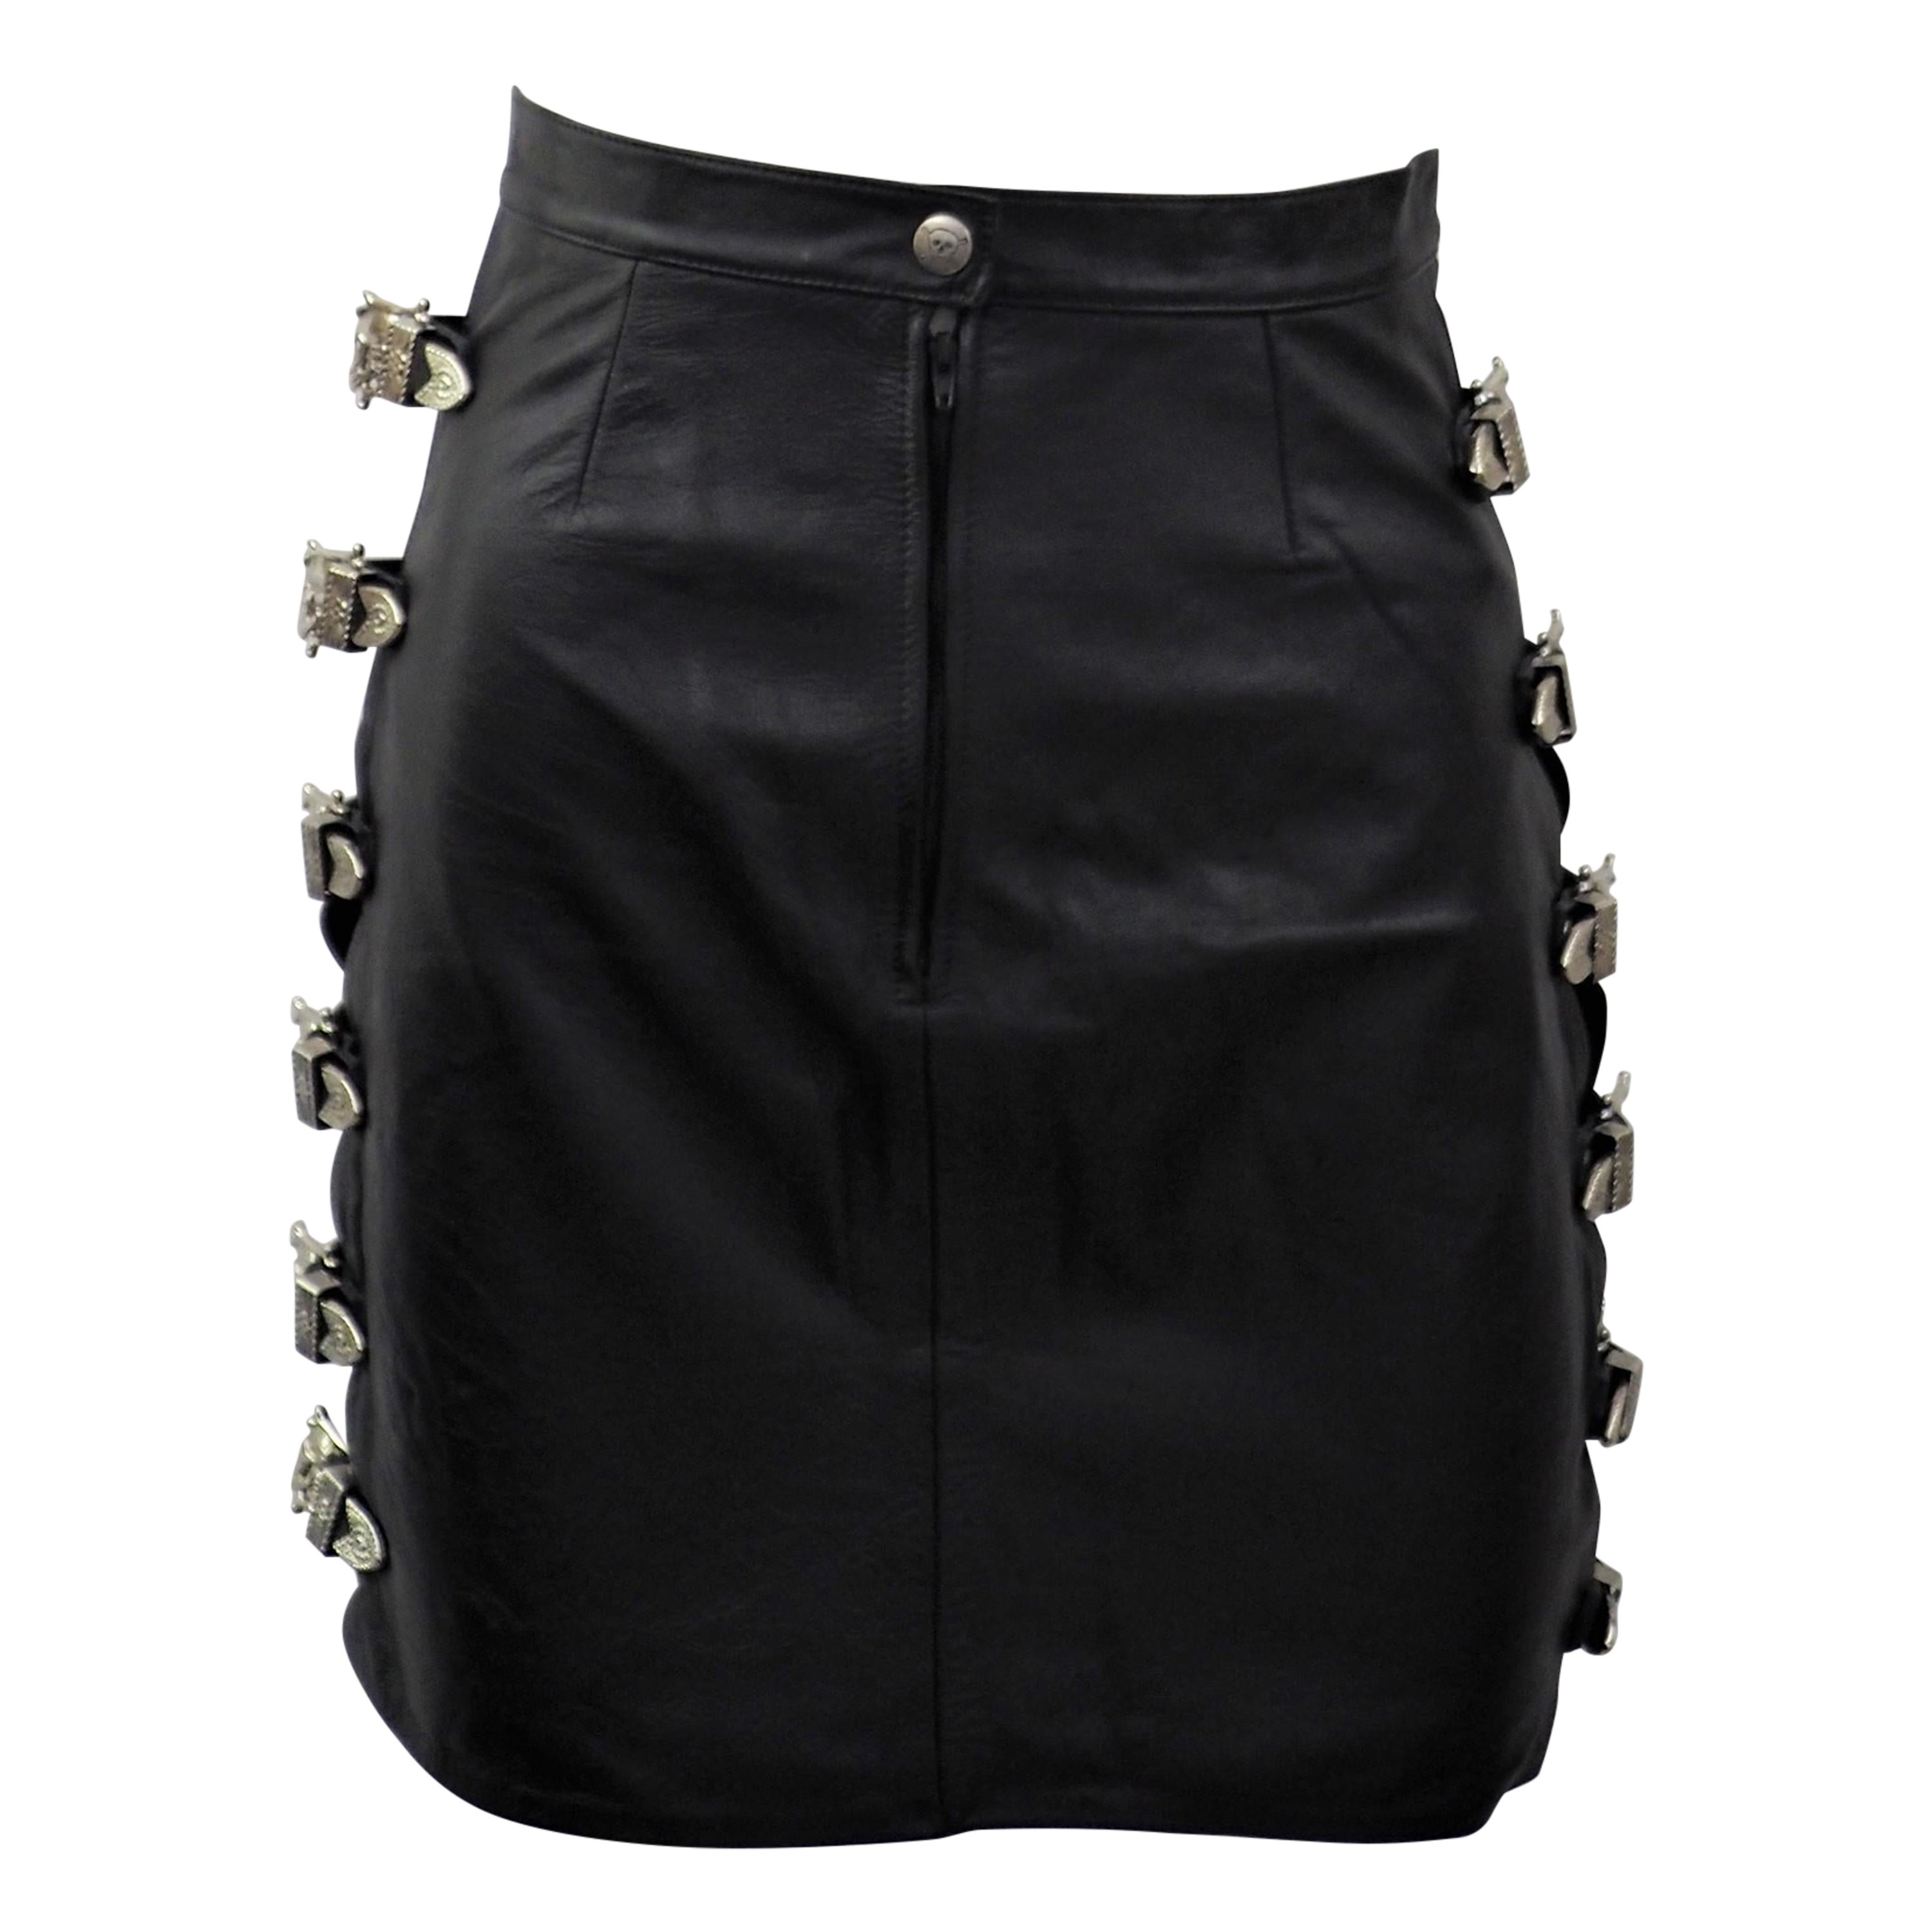 Marley black leather skirt For Sale